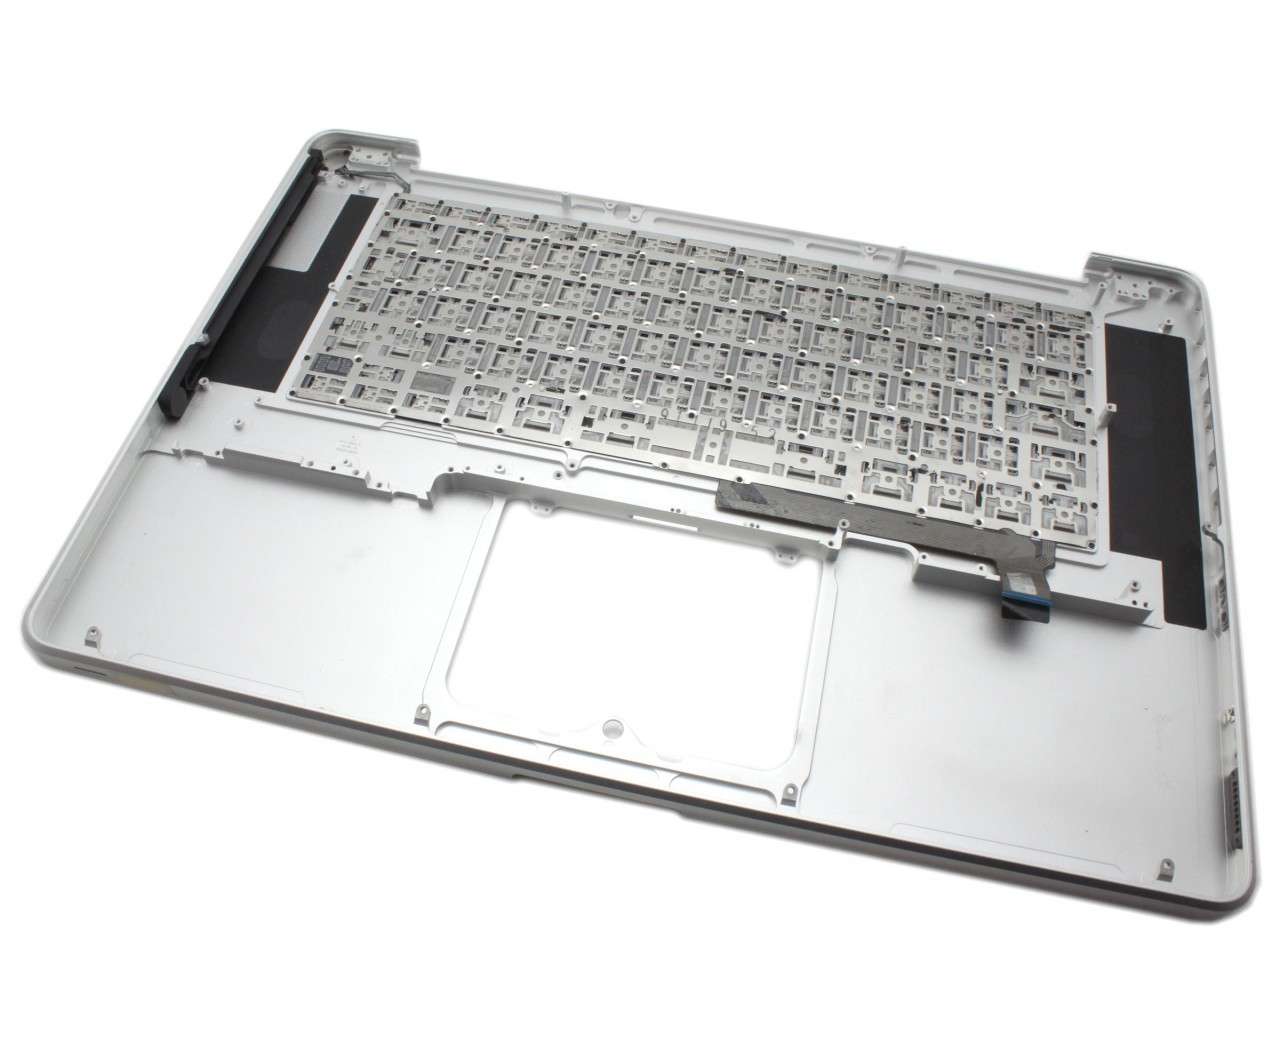 Tastatura Apple MacBook Pro 15 A1286 Neagra cu Palmrest Argintiu Refurbished Apple Apple